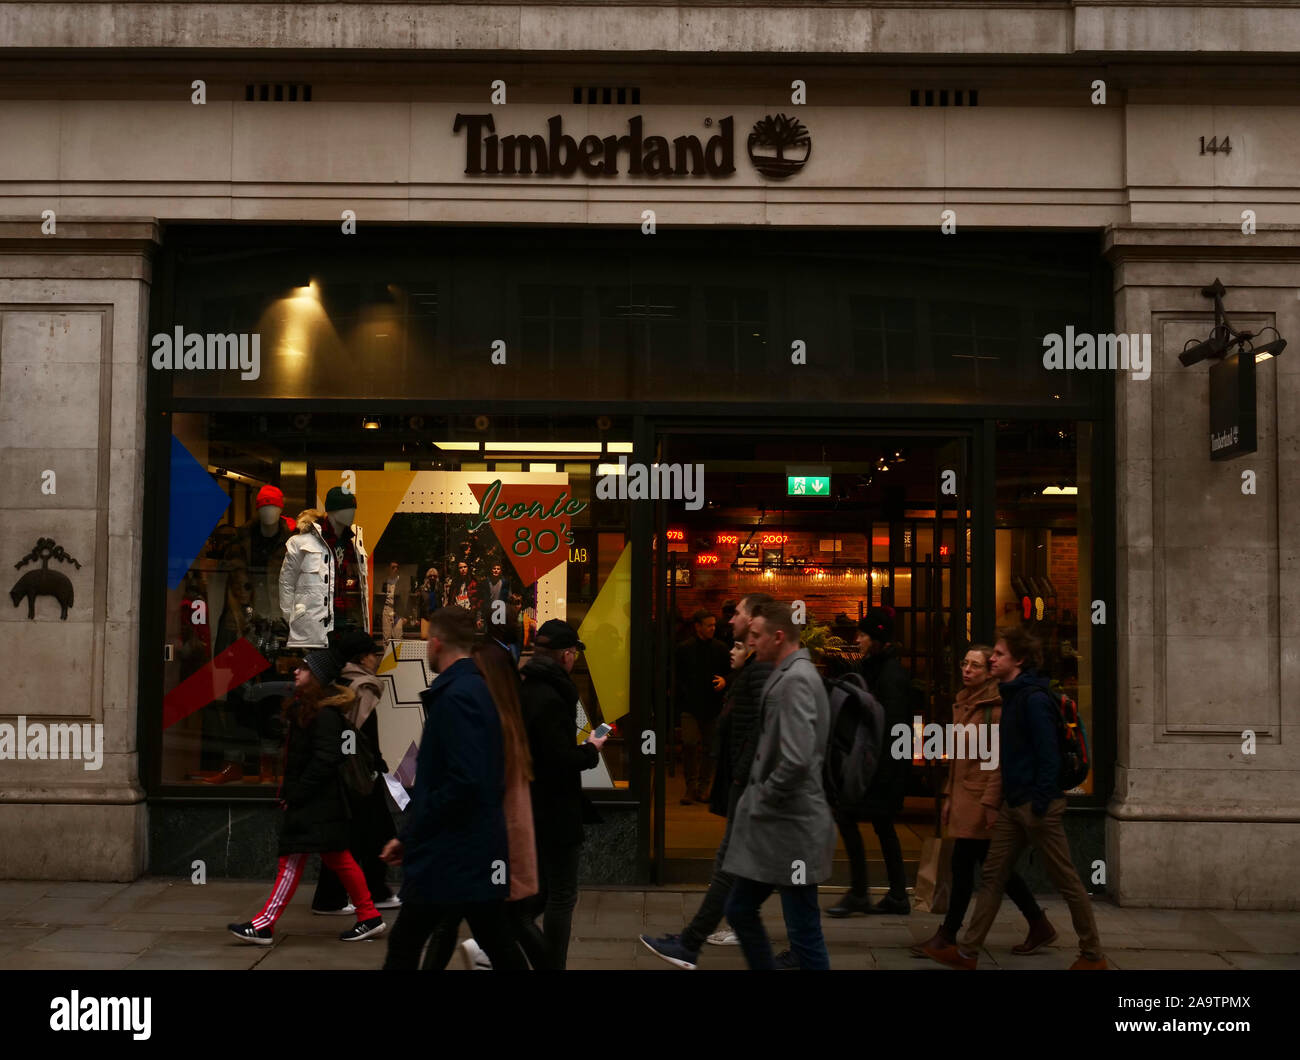 Timberland escaparate londres fotografías e imágenes de alta resolución -  Alamy